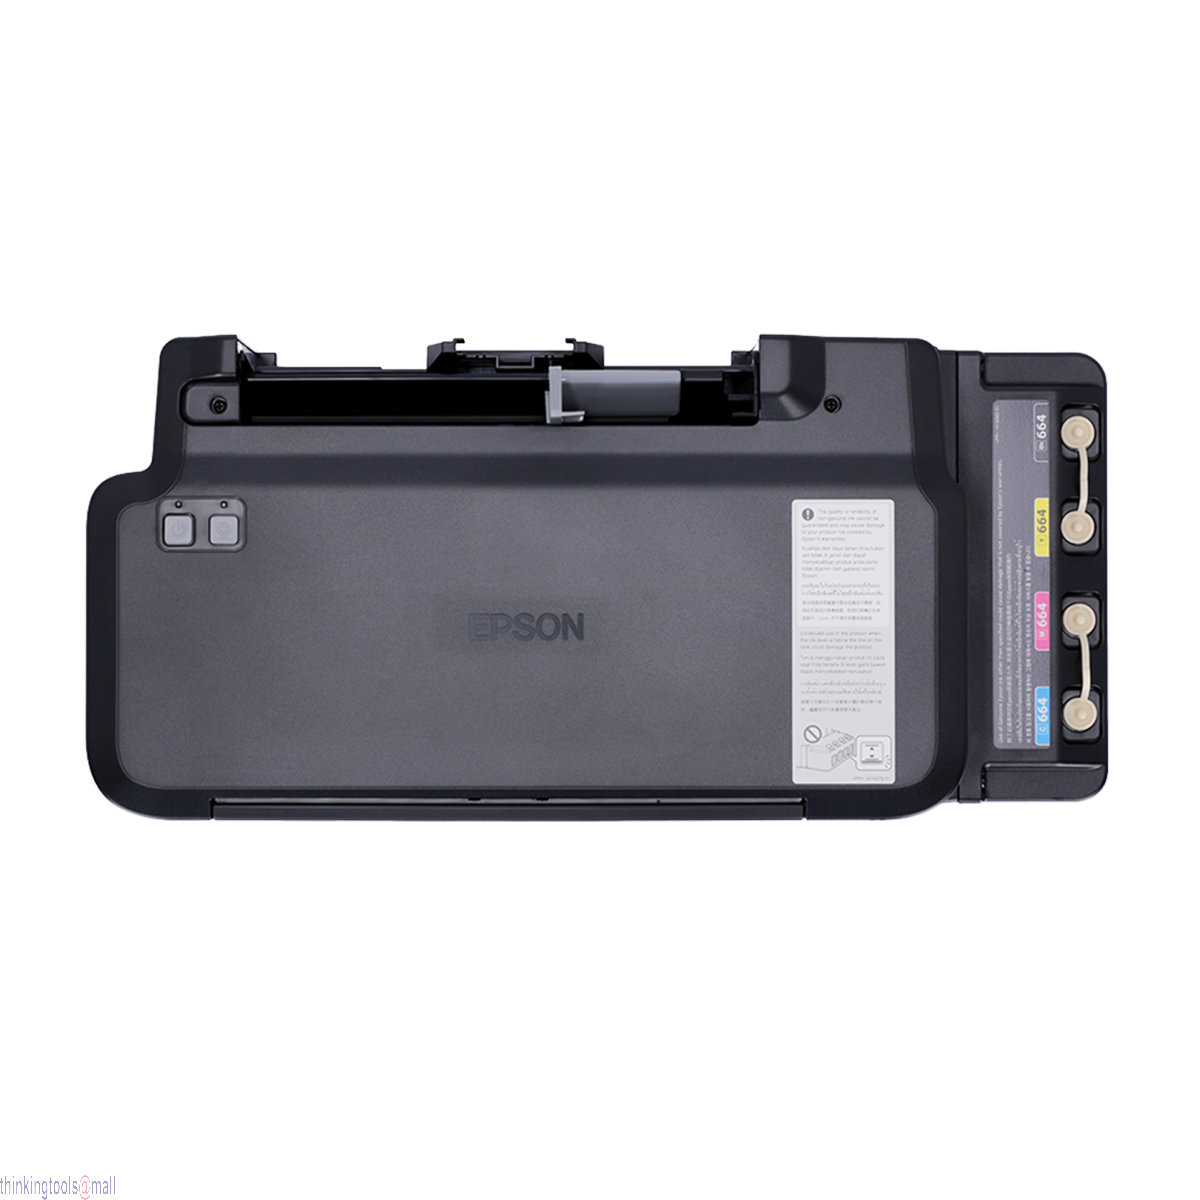 Epson L121 Ink Tank Printer